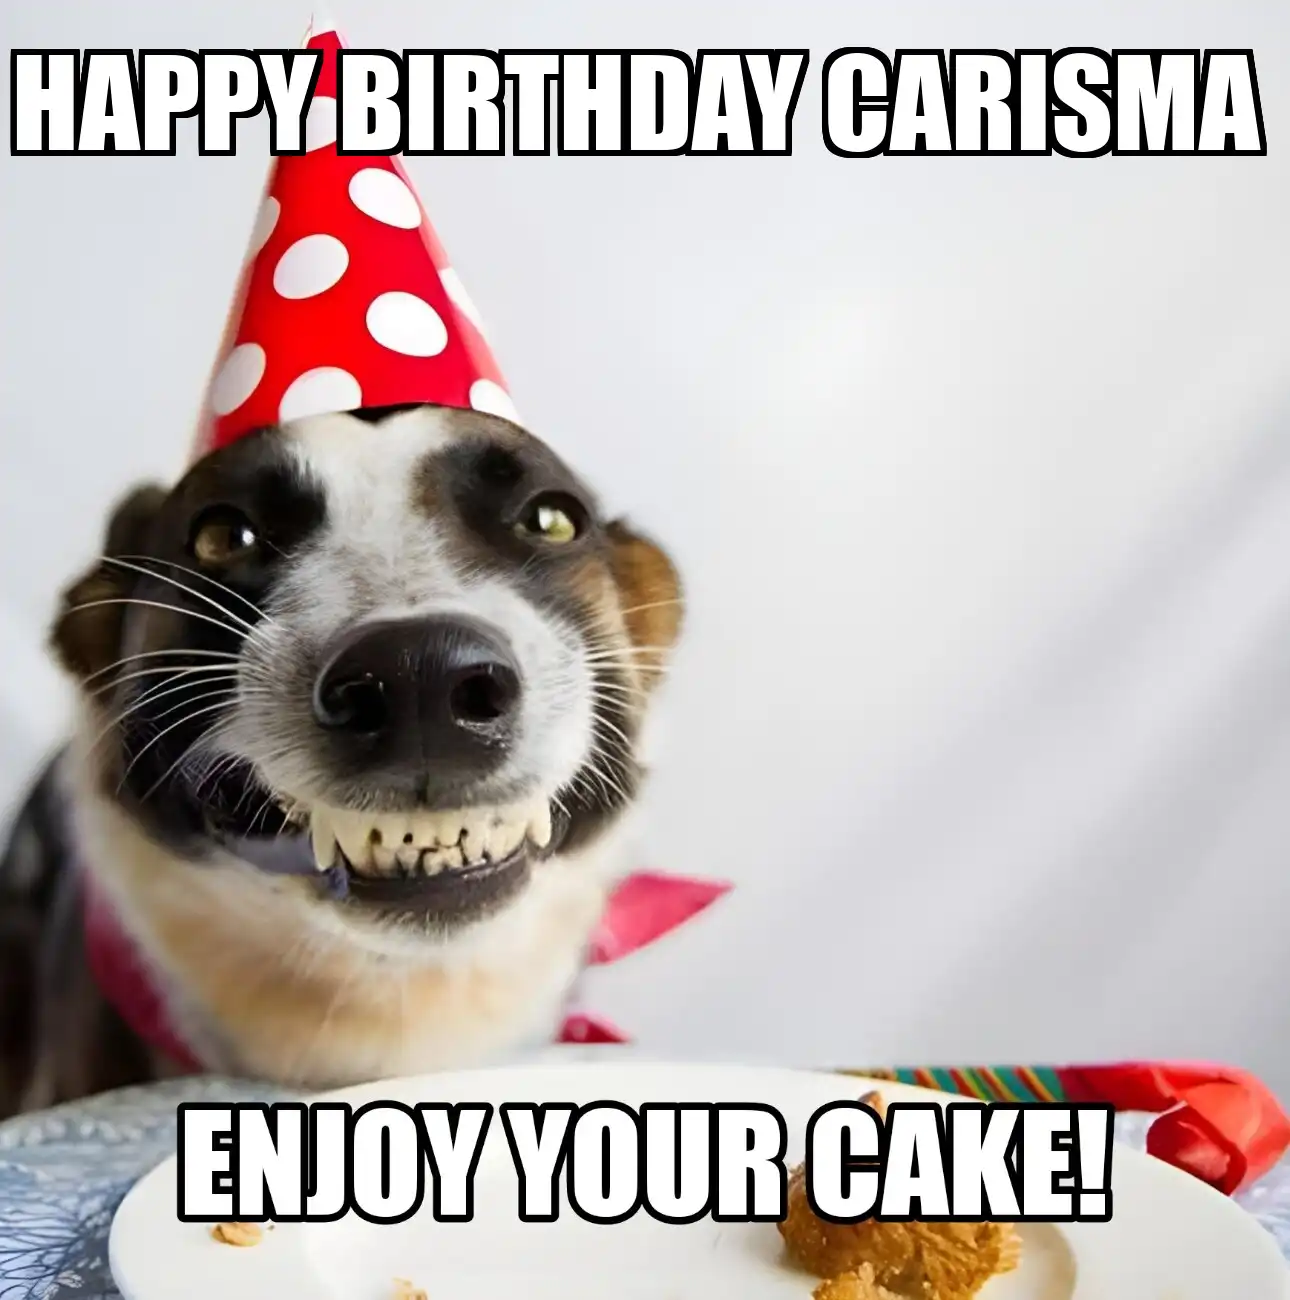 Happy Birthday Carisma Enjoy Your Cake Dog Meme